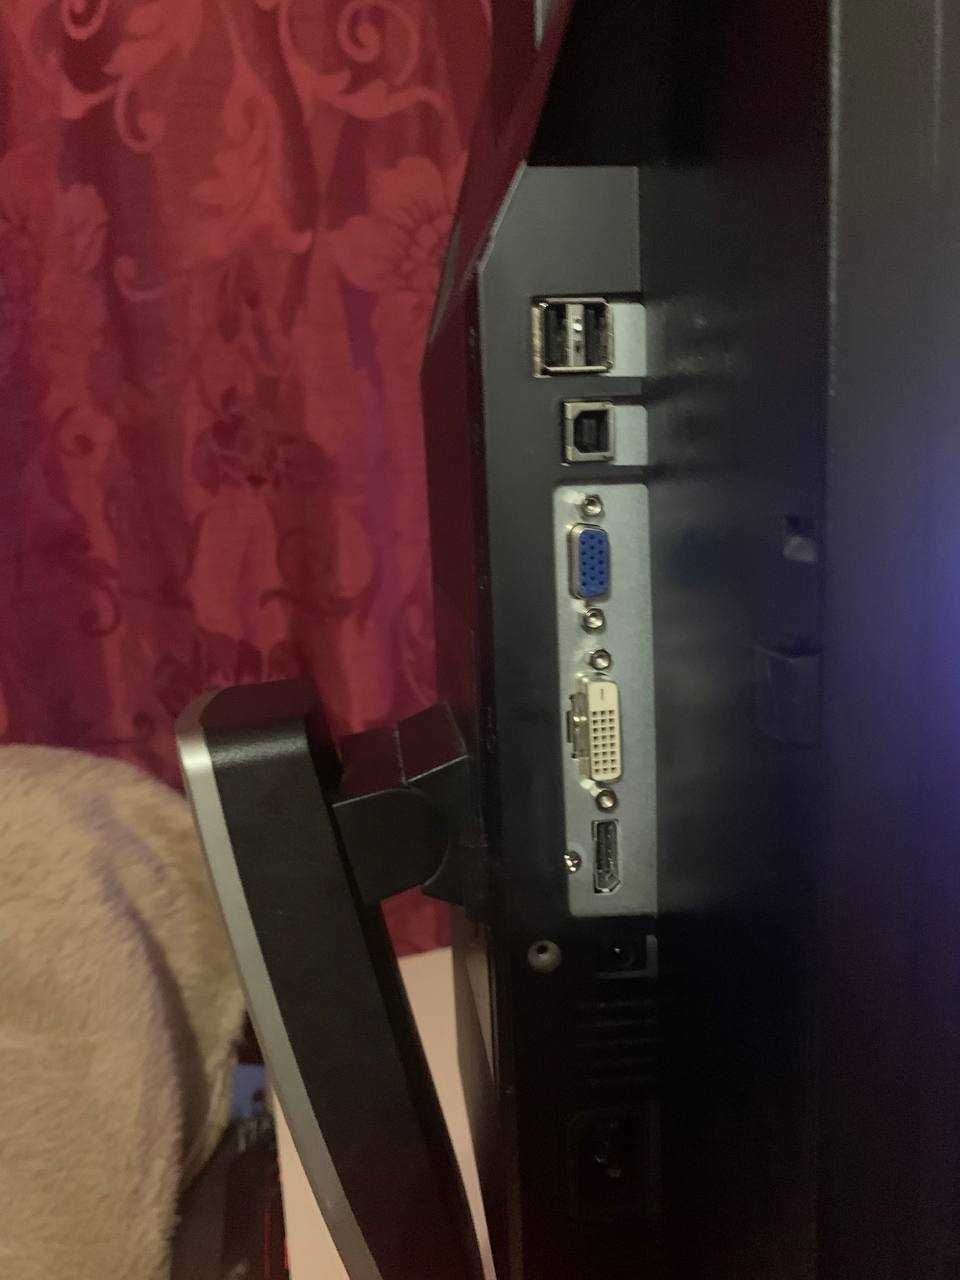 Монитор Dell P2210 / 22" (1680x1050) TN / DVI, DP, VGA, USB 2.0